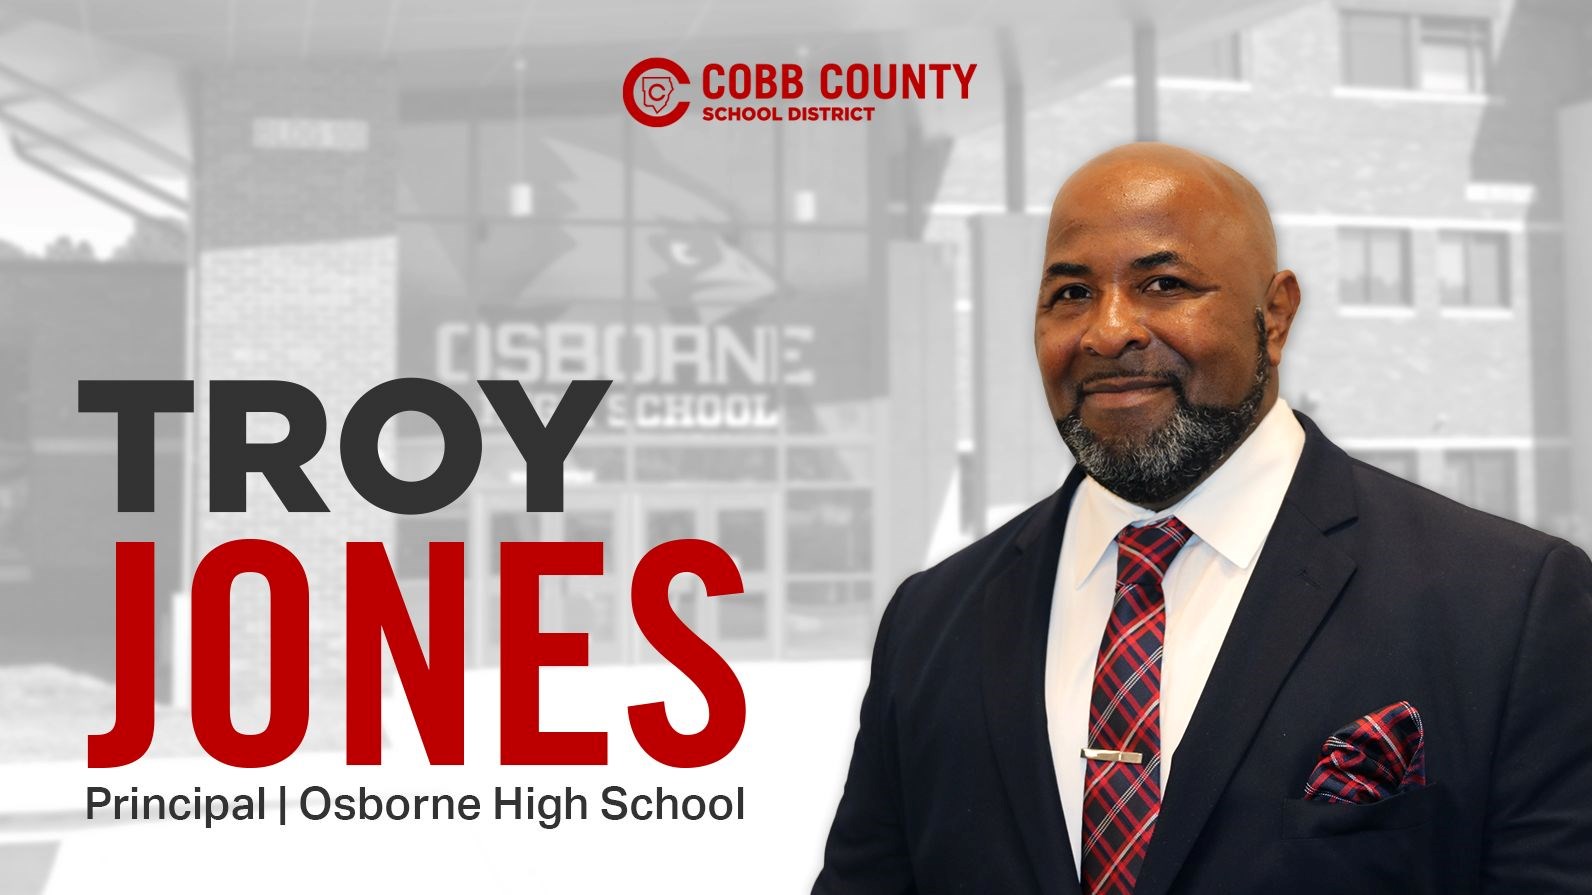 Troy Jones serves as principal of Osborne High School